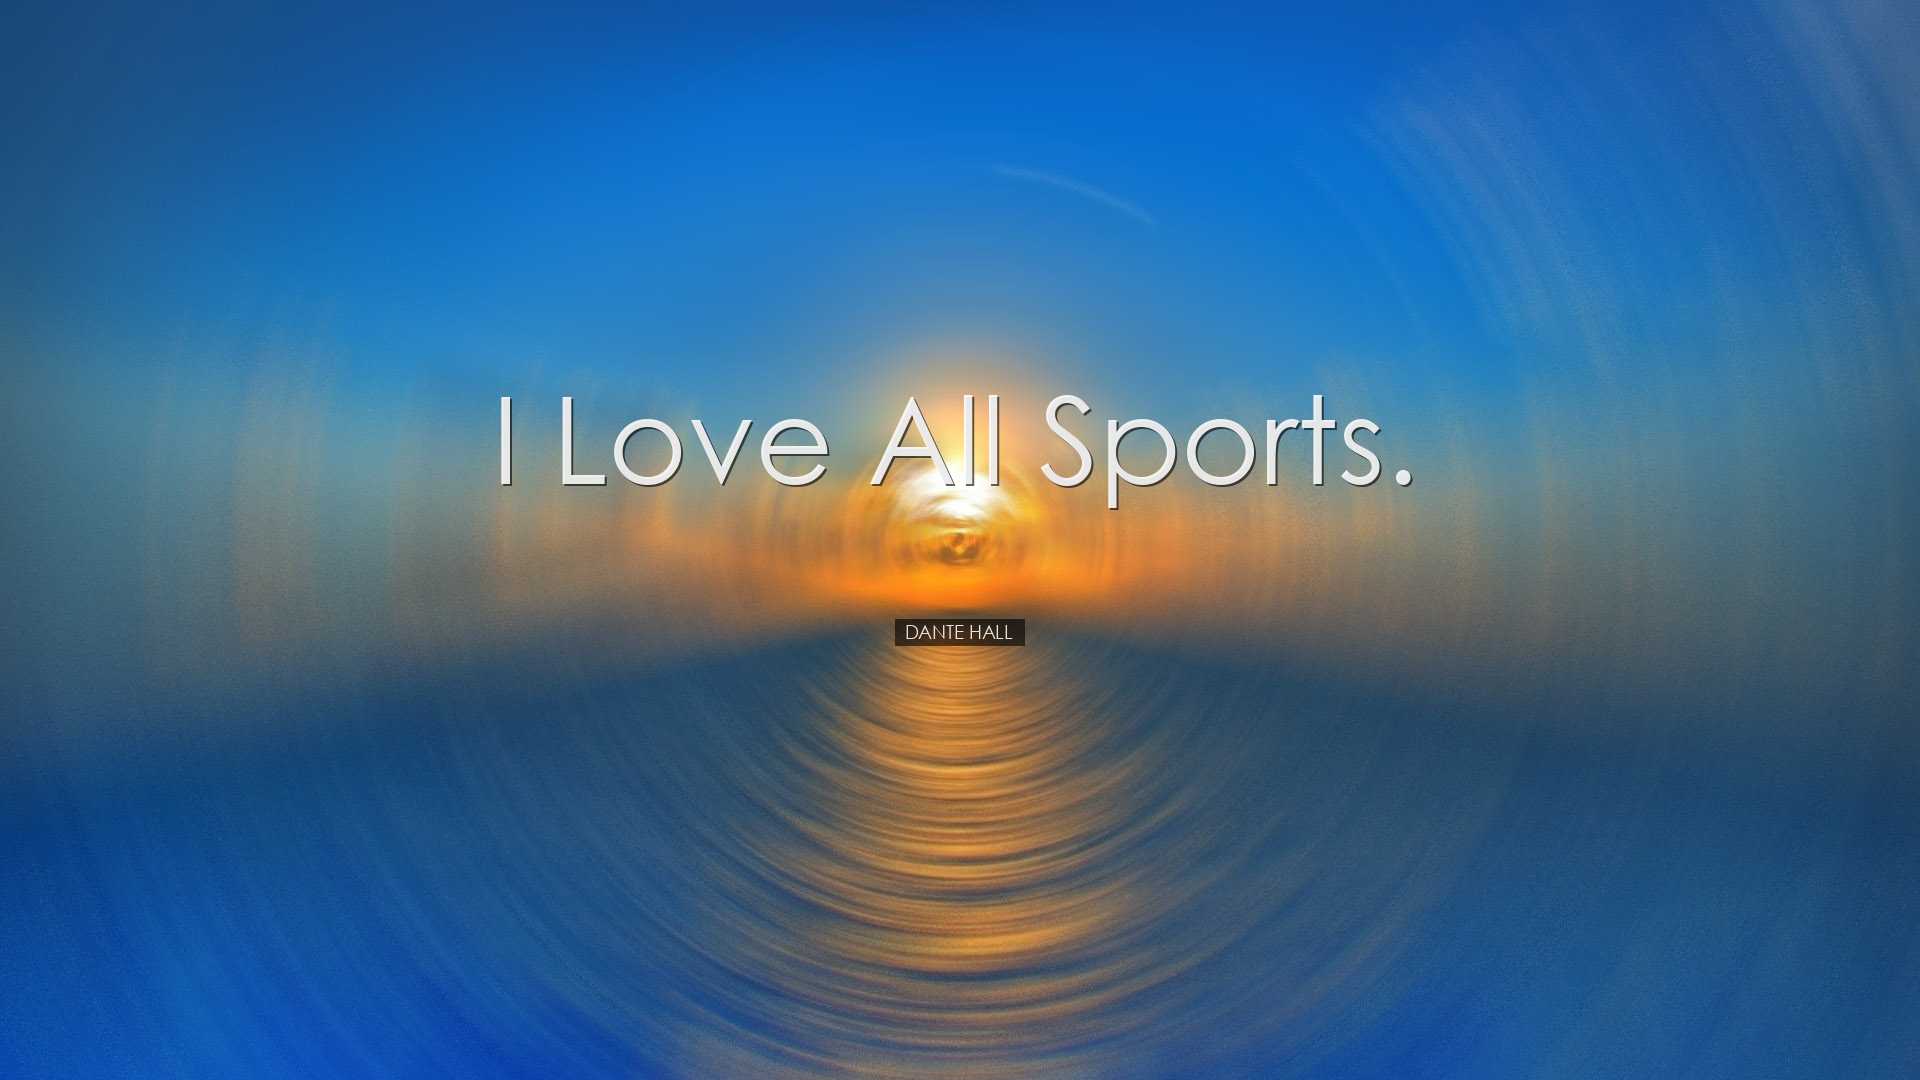 I love all sports. - Dante Hall